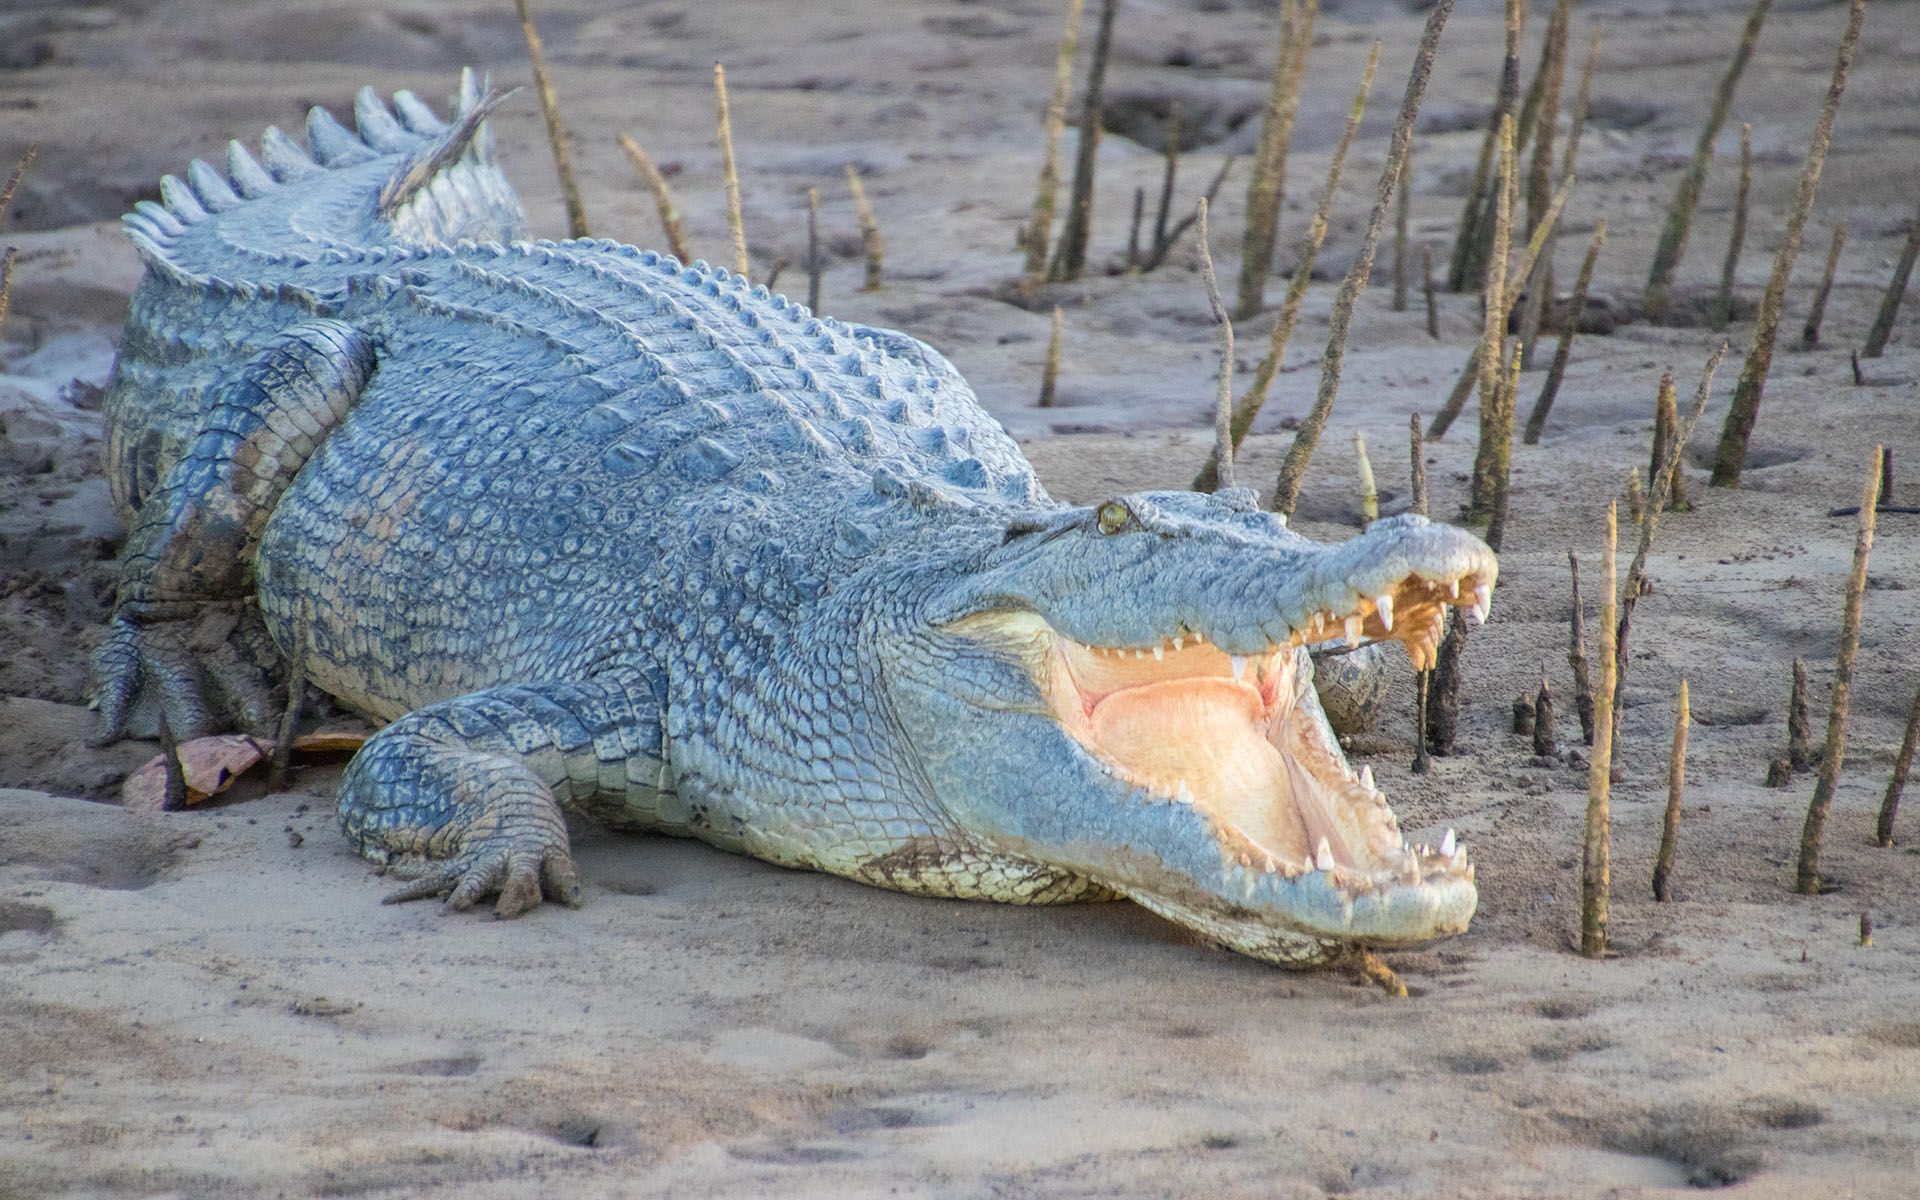 Snapping Tours Wildlife Tour - Saltwater Crocodile